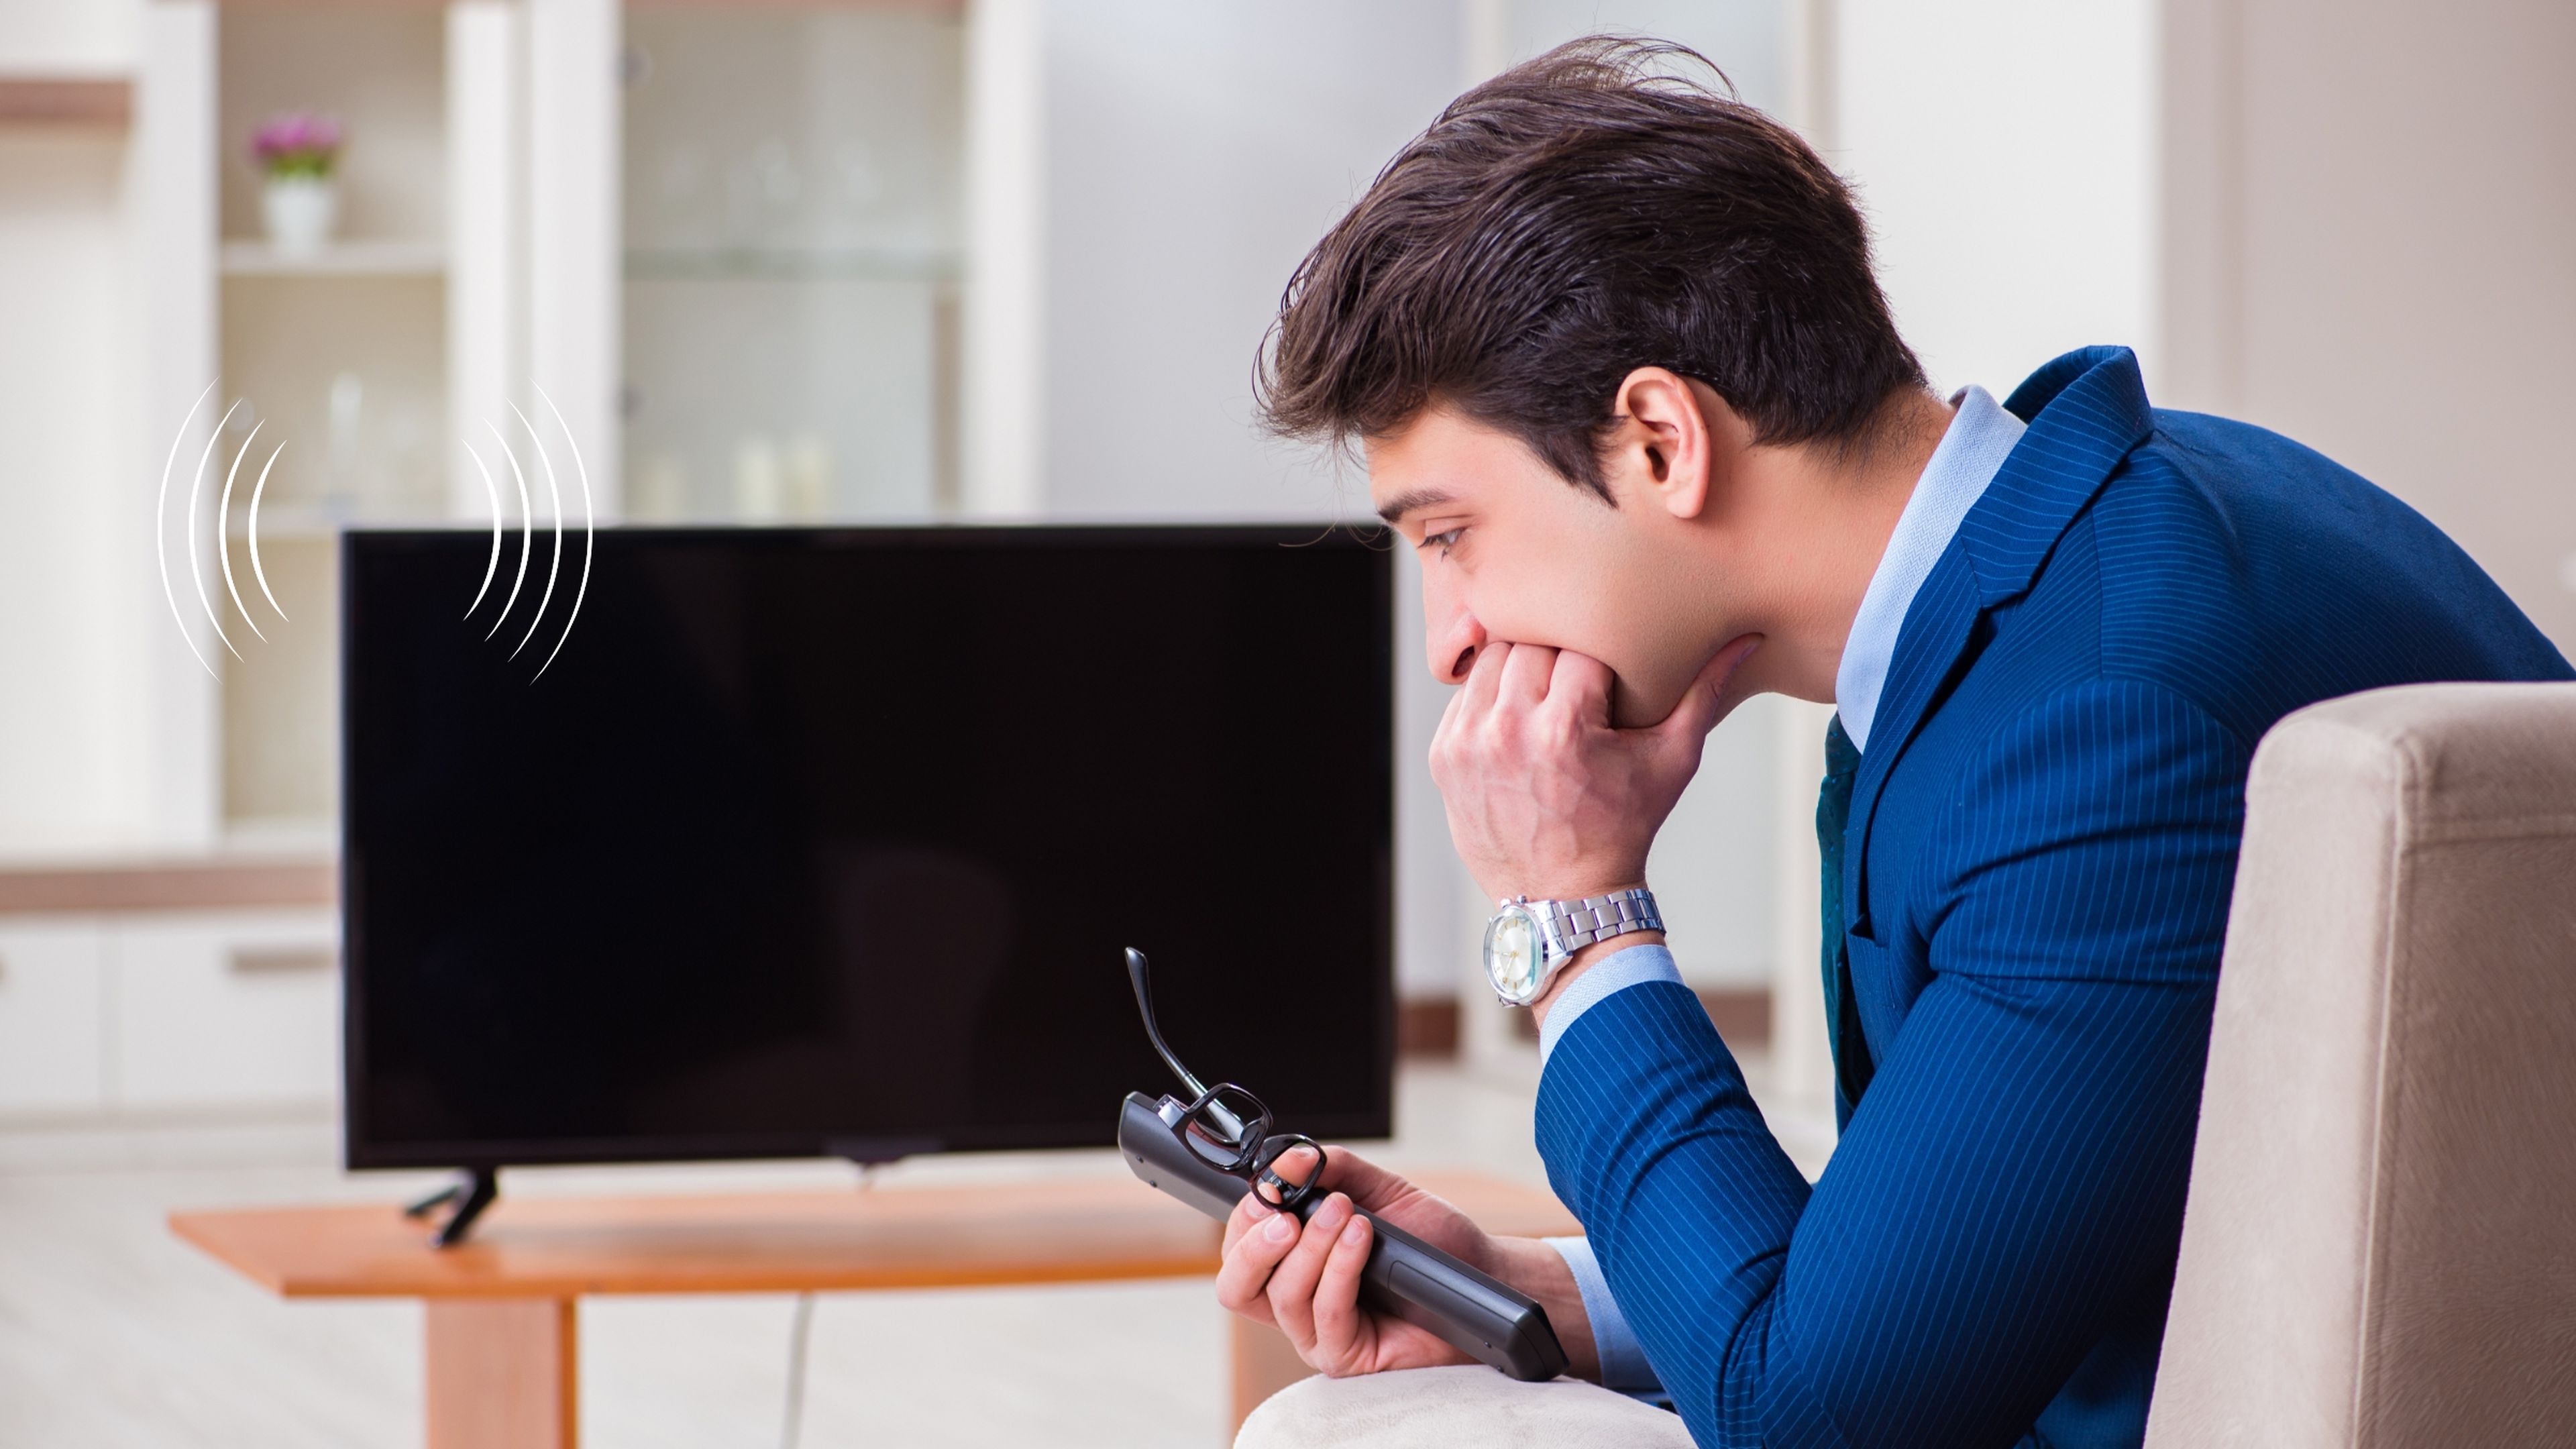 QuÃ© hacer si tu Smart TV se escucha, pero no se ve: 5 mÃ©todos para solucionarlo